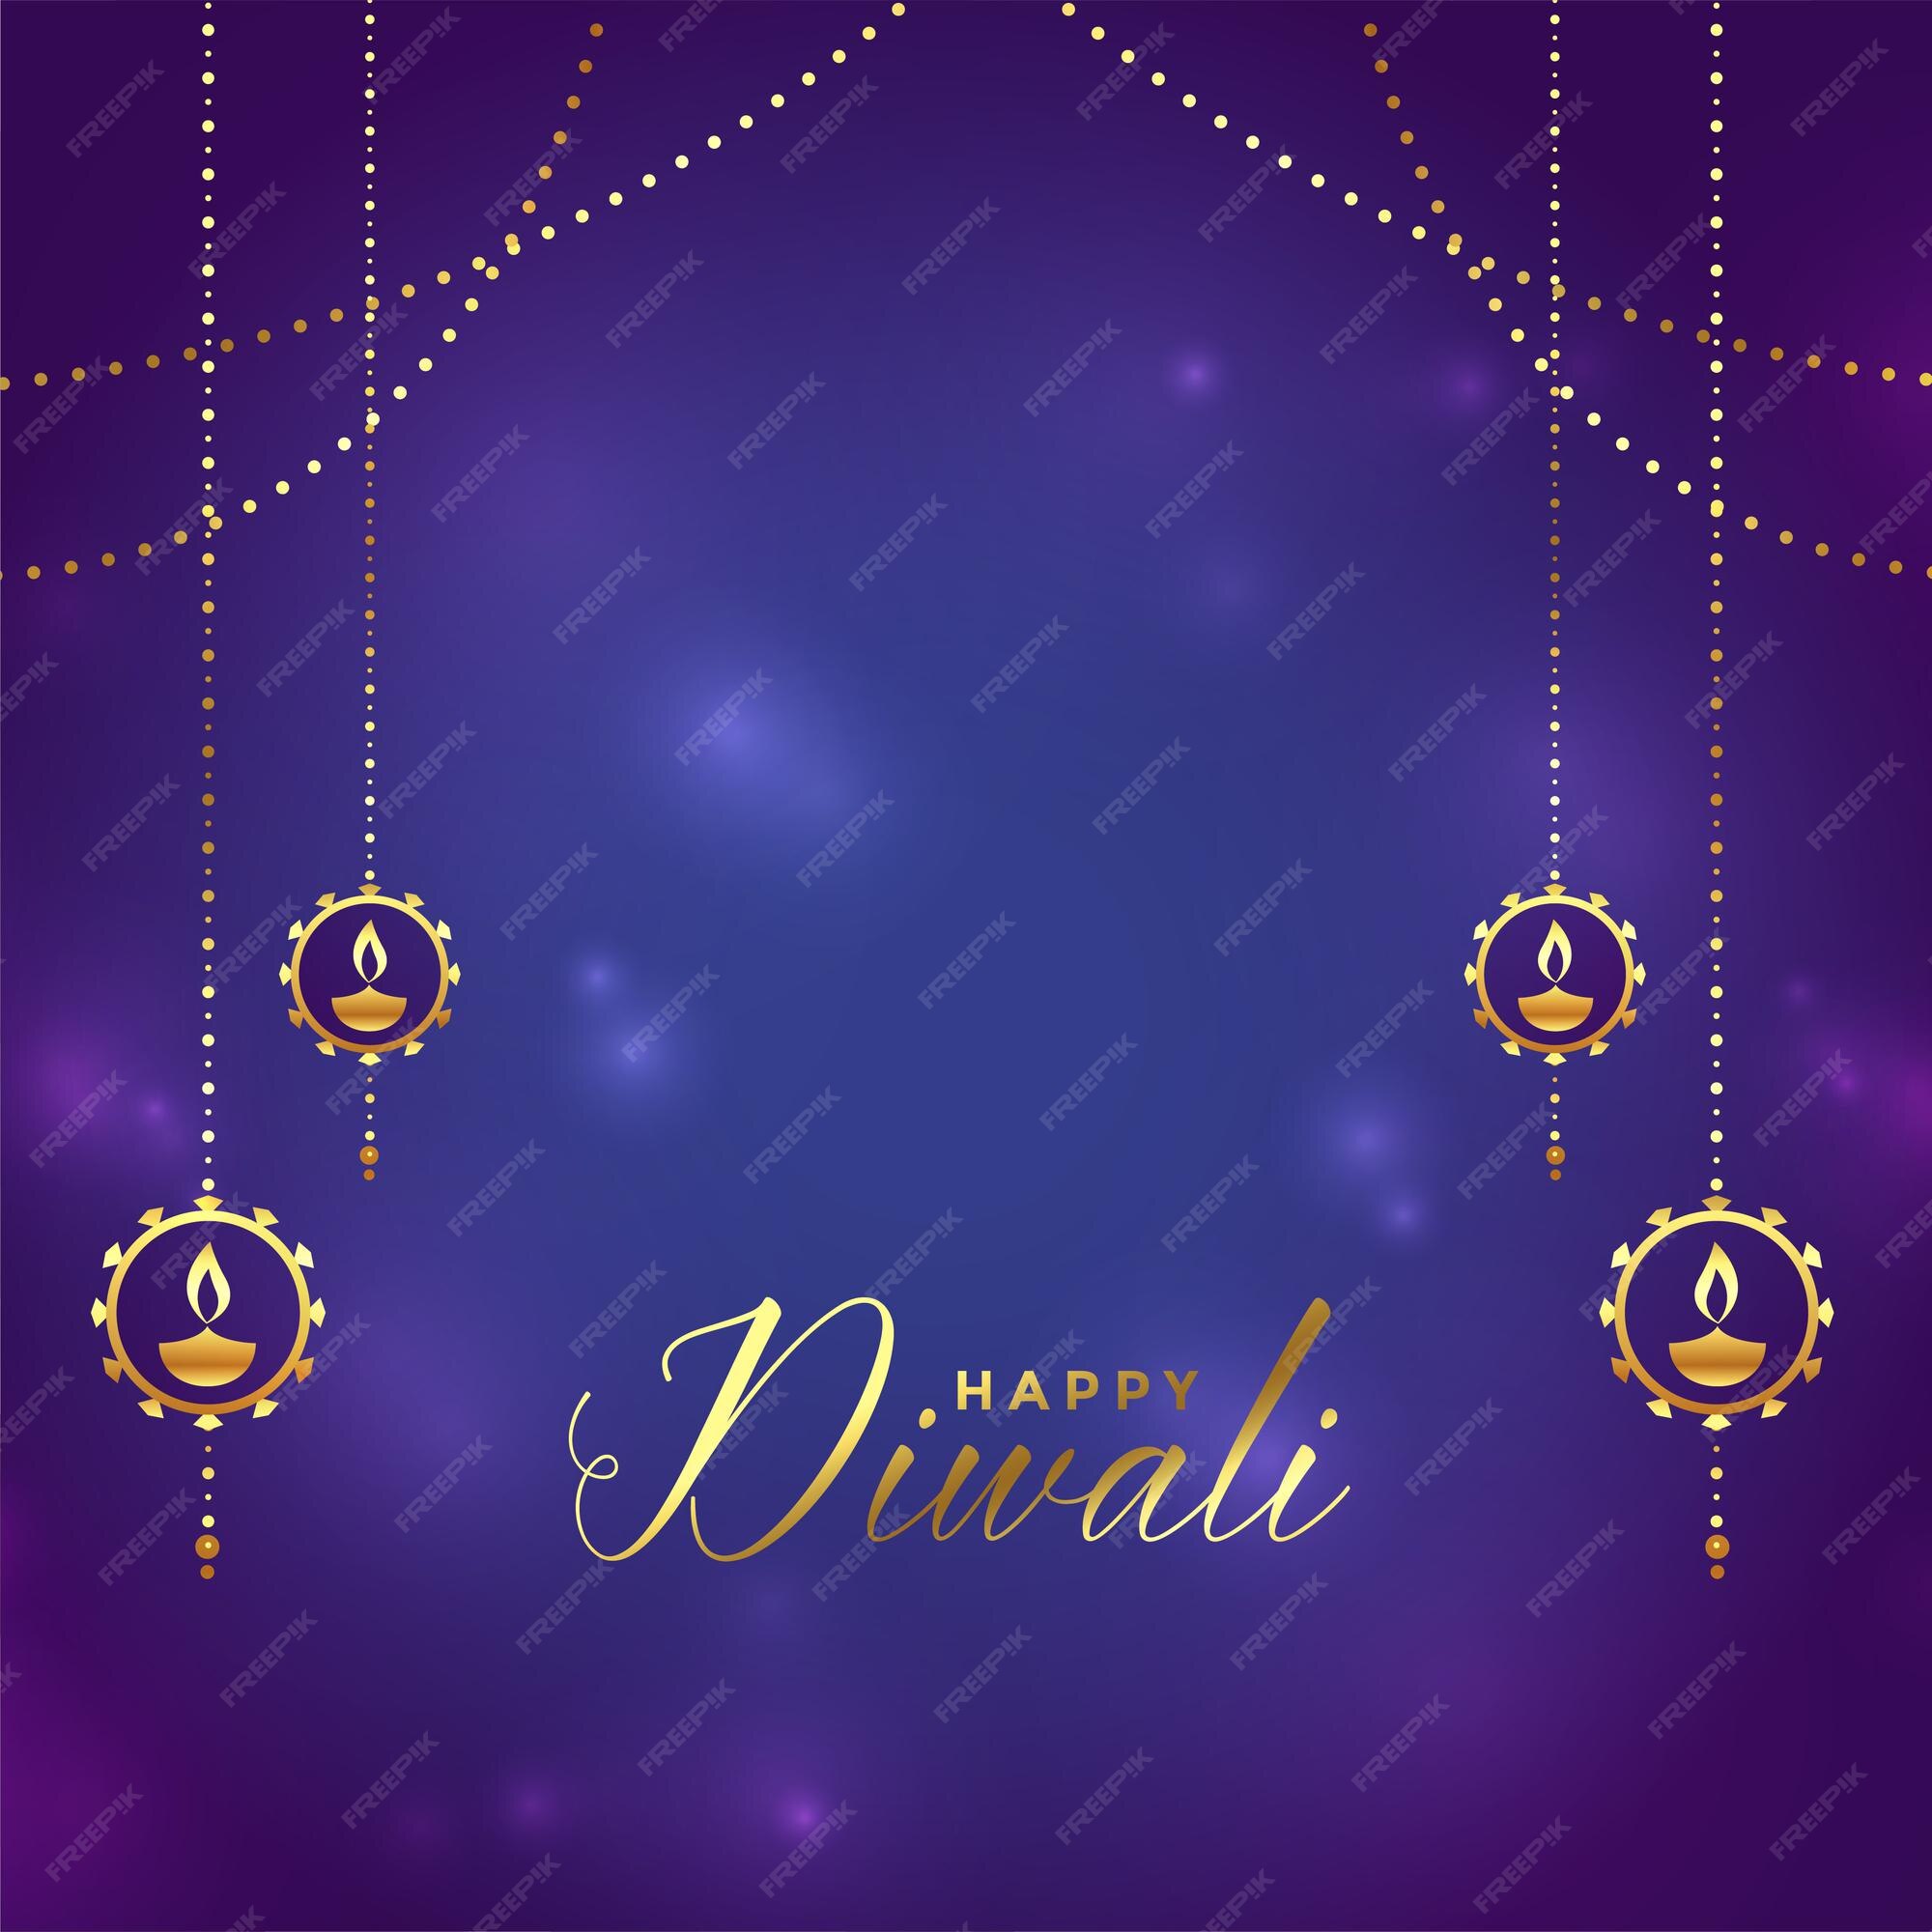 Free Vector | Happy diwali purple shiny golden background